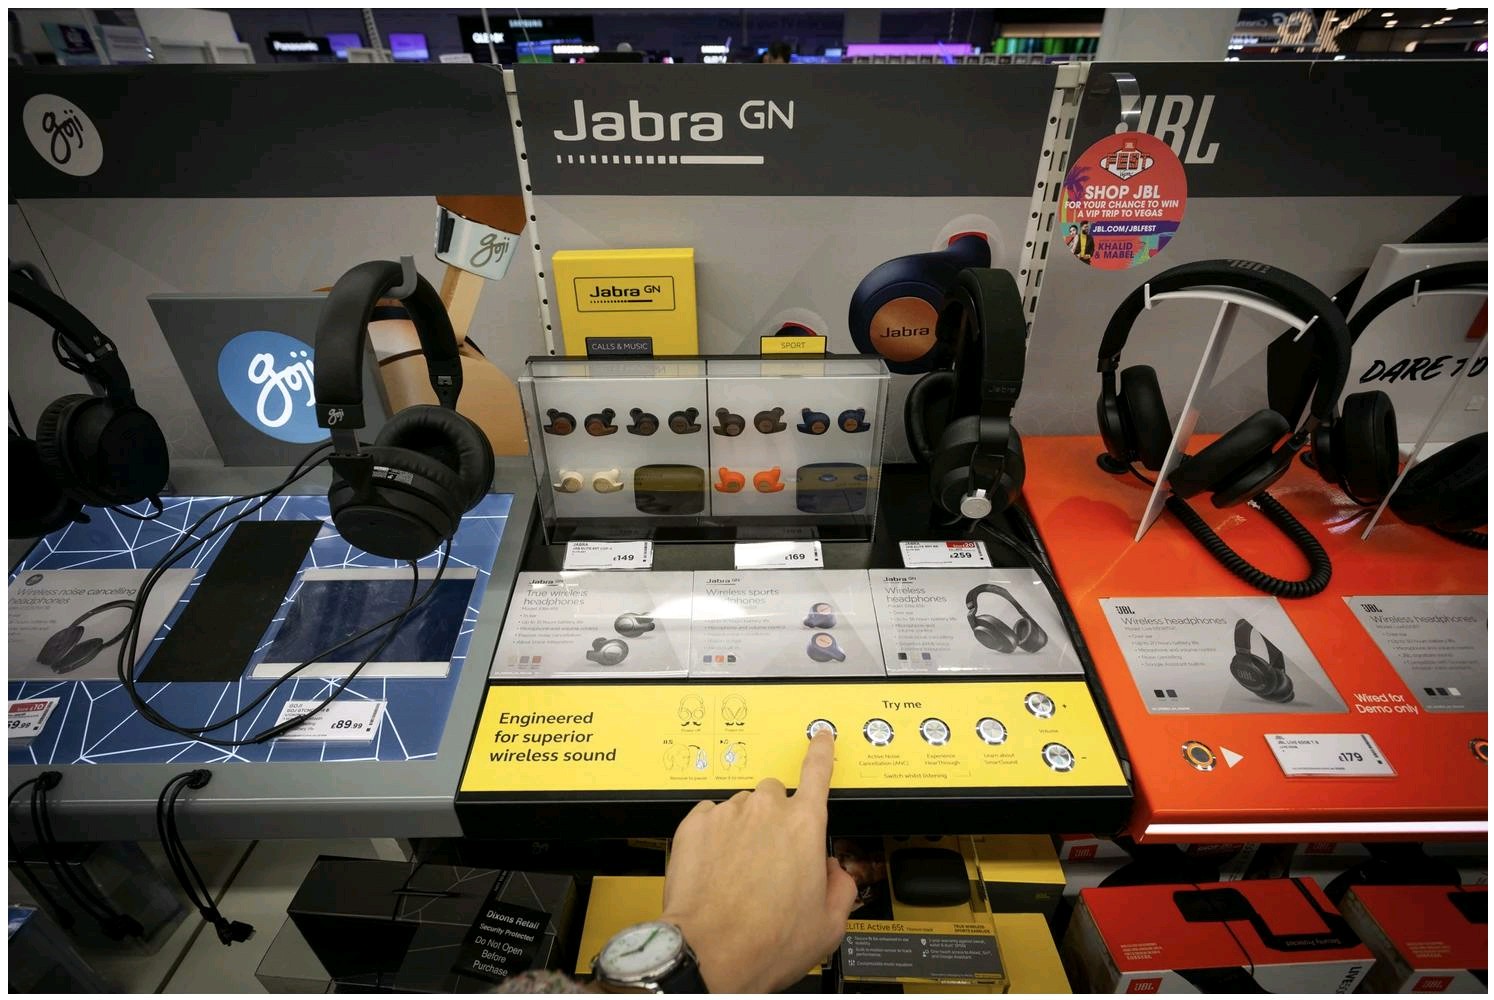 rechi retail visual merchandising display props